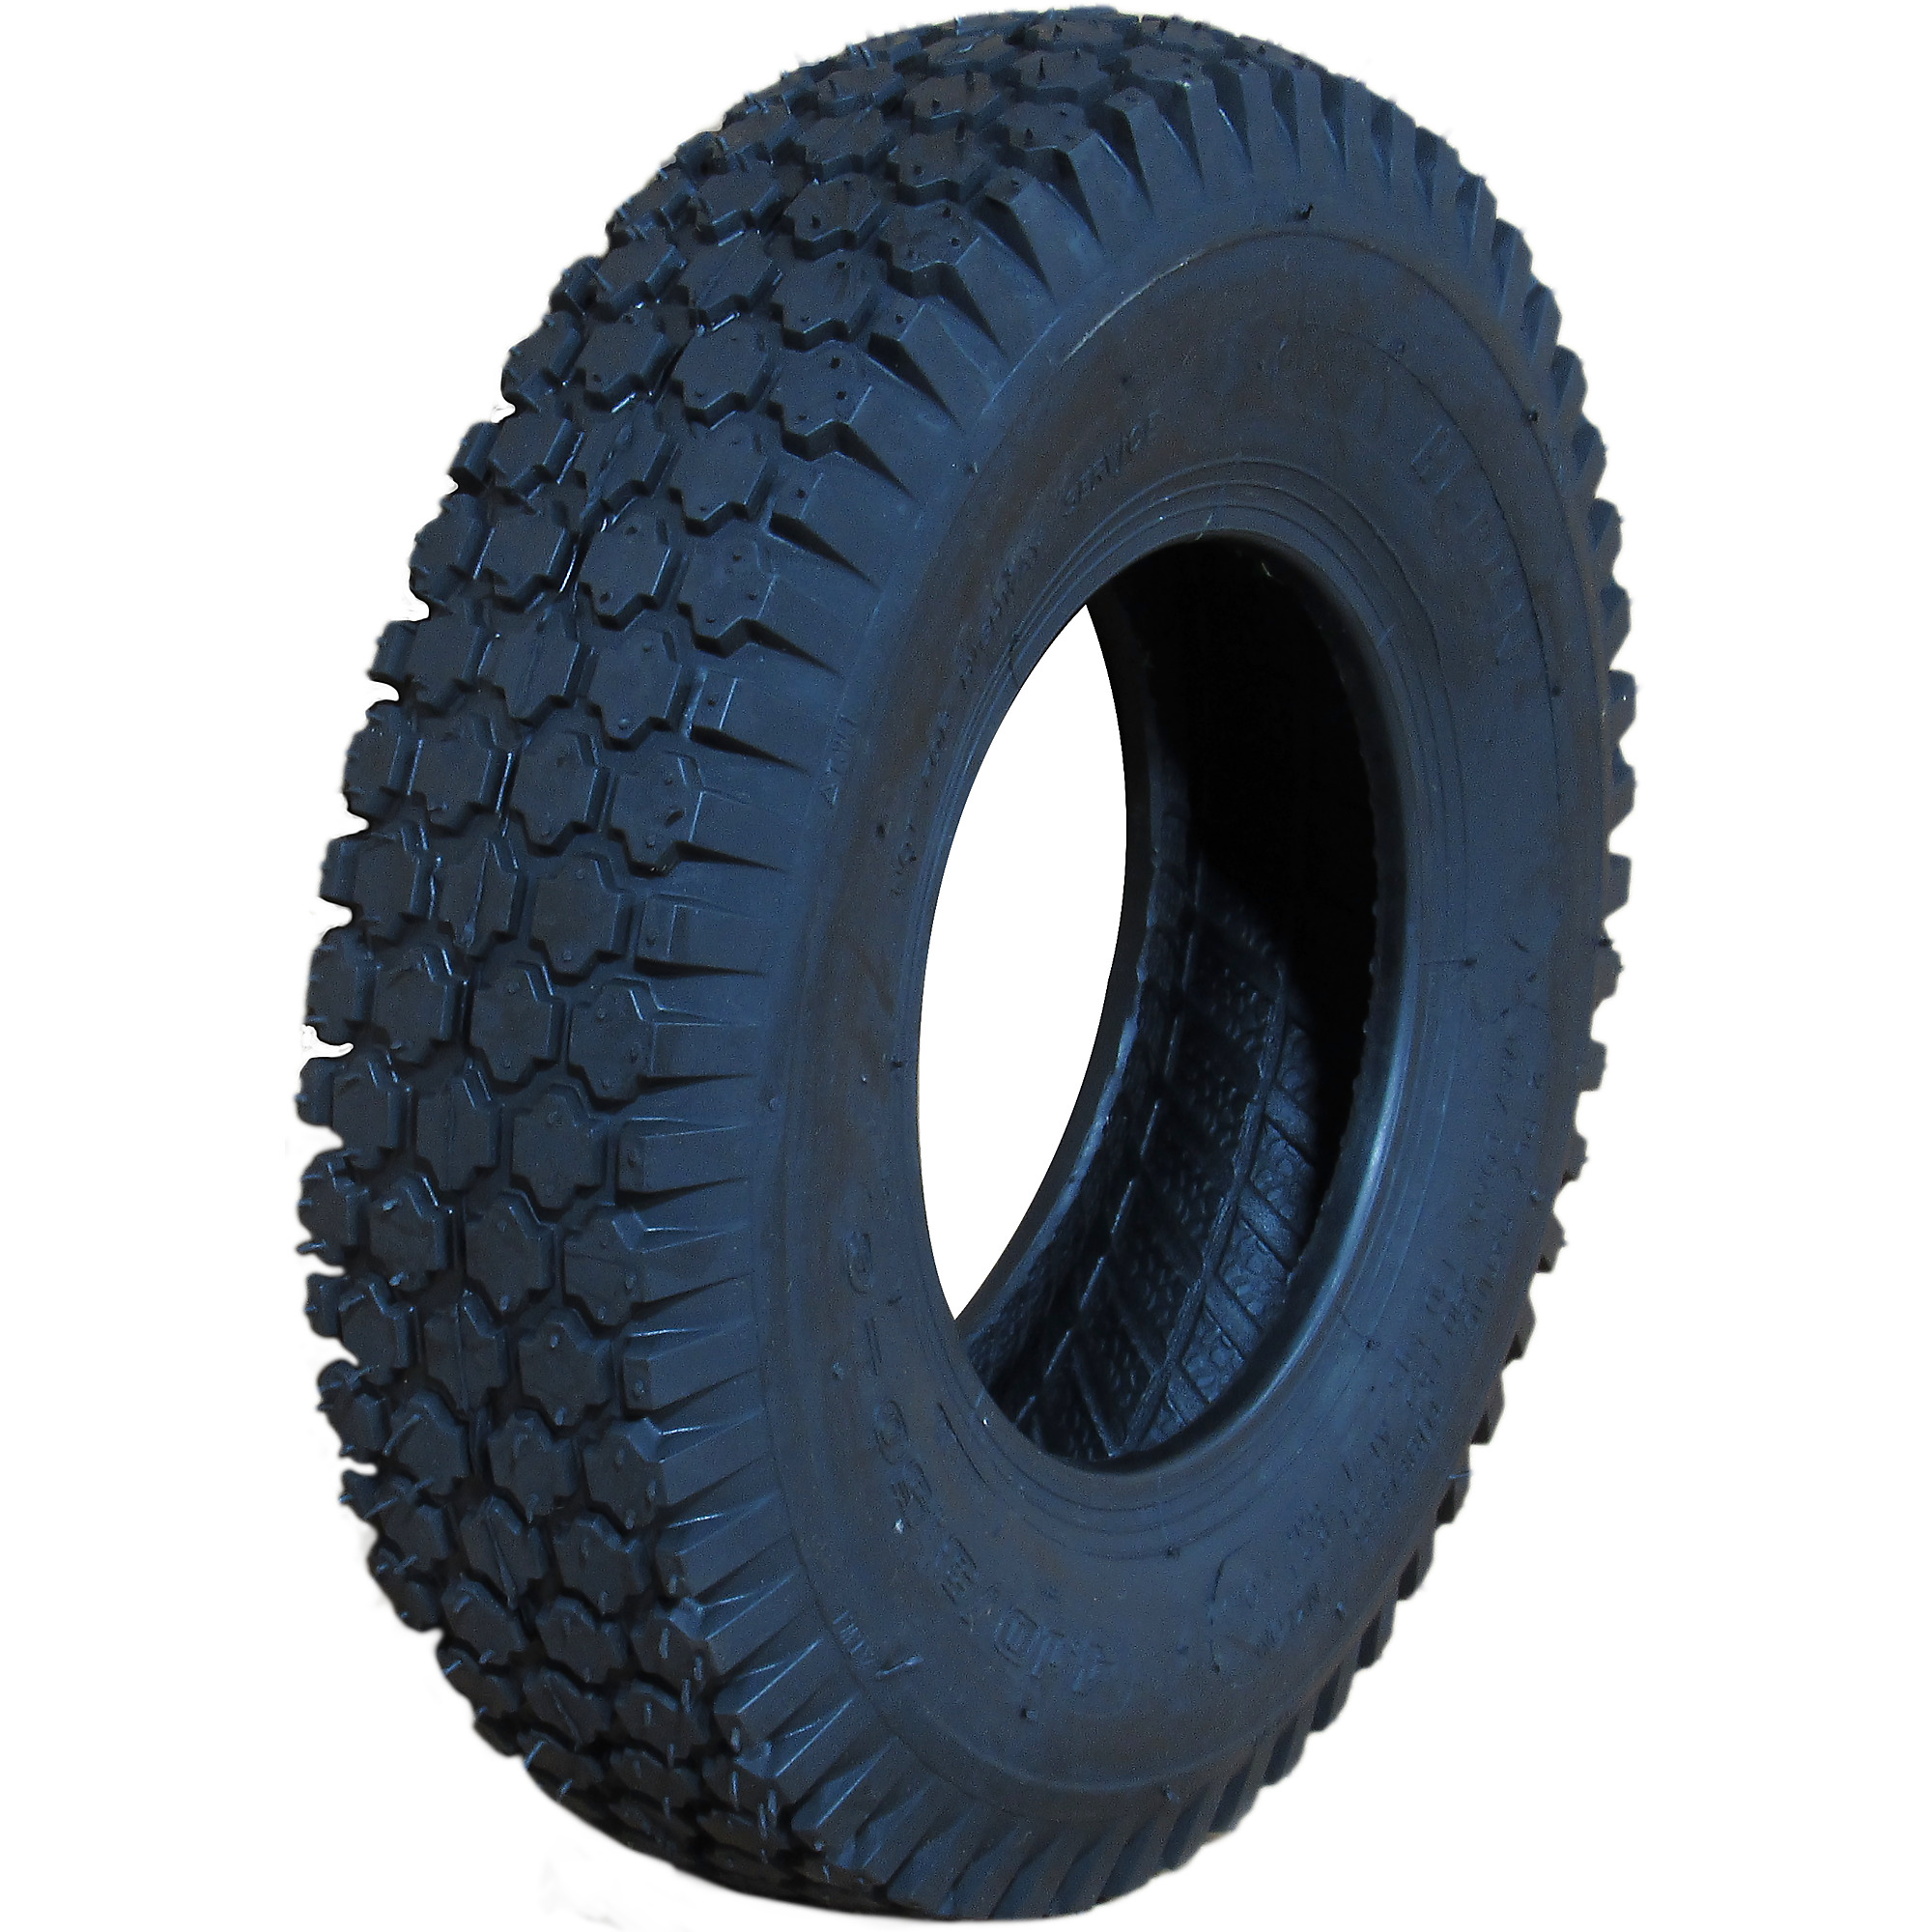 HI-RUN, Lawn Garden Tire, Stud, Tire Size 4.10/3.50-6 Load Range Rating A, Model WD1051